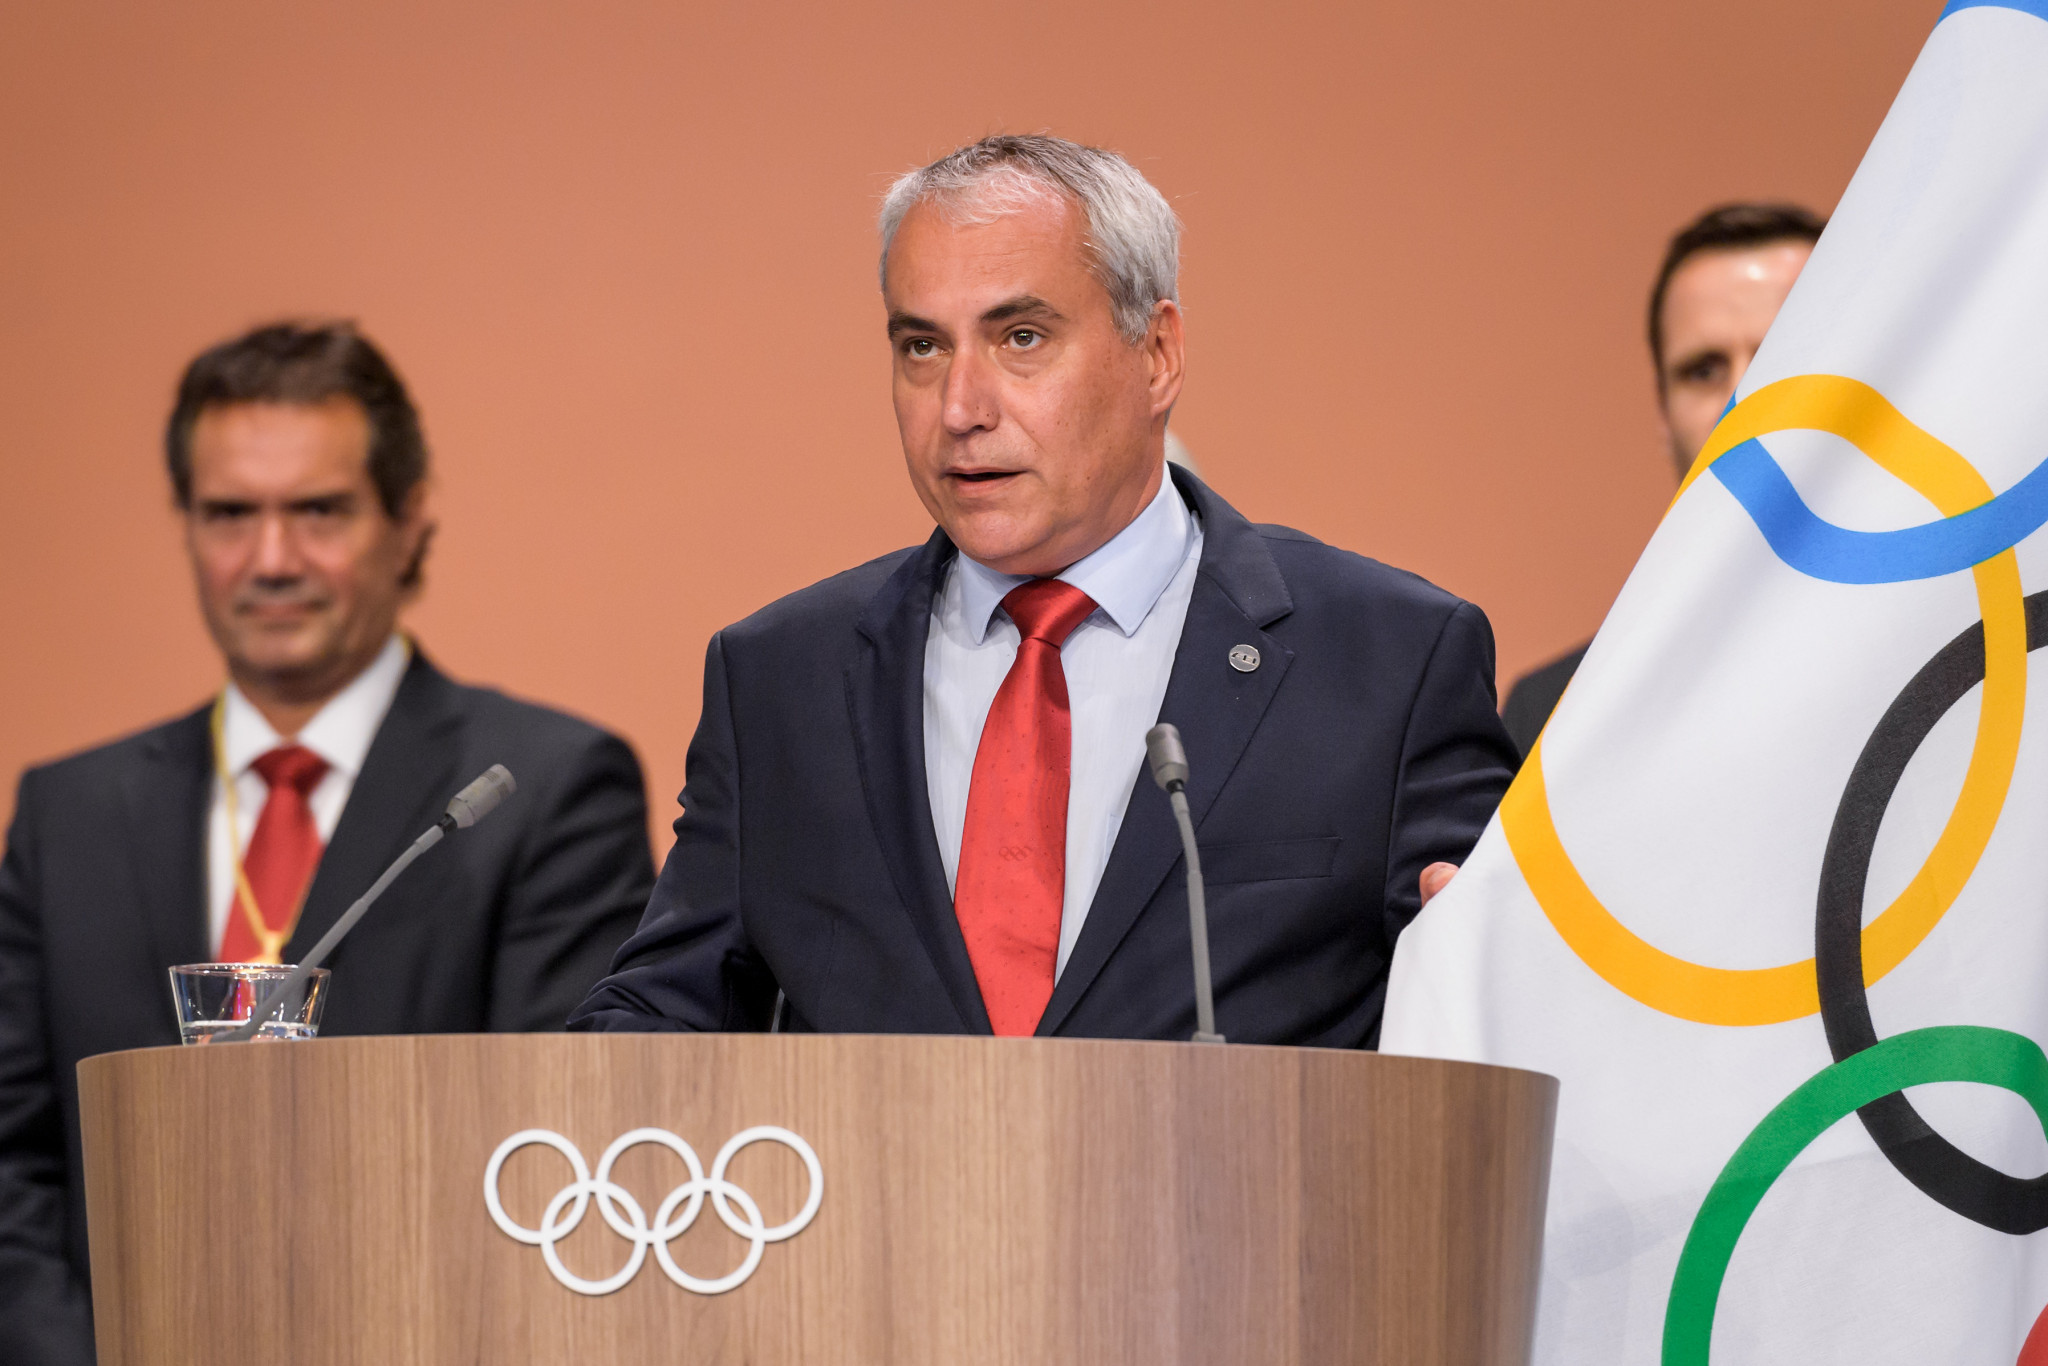 FEI President Ingmar De Vos has been an IOC member since September 2017 ©Getty Images